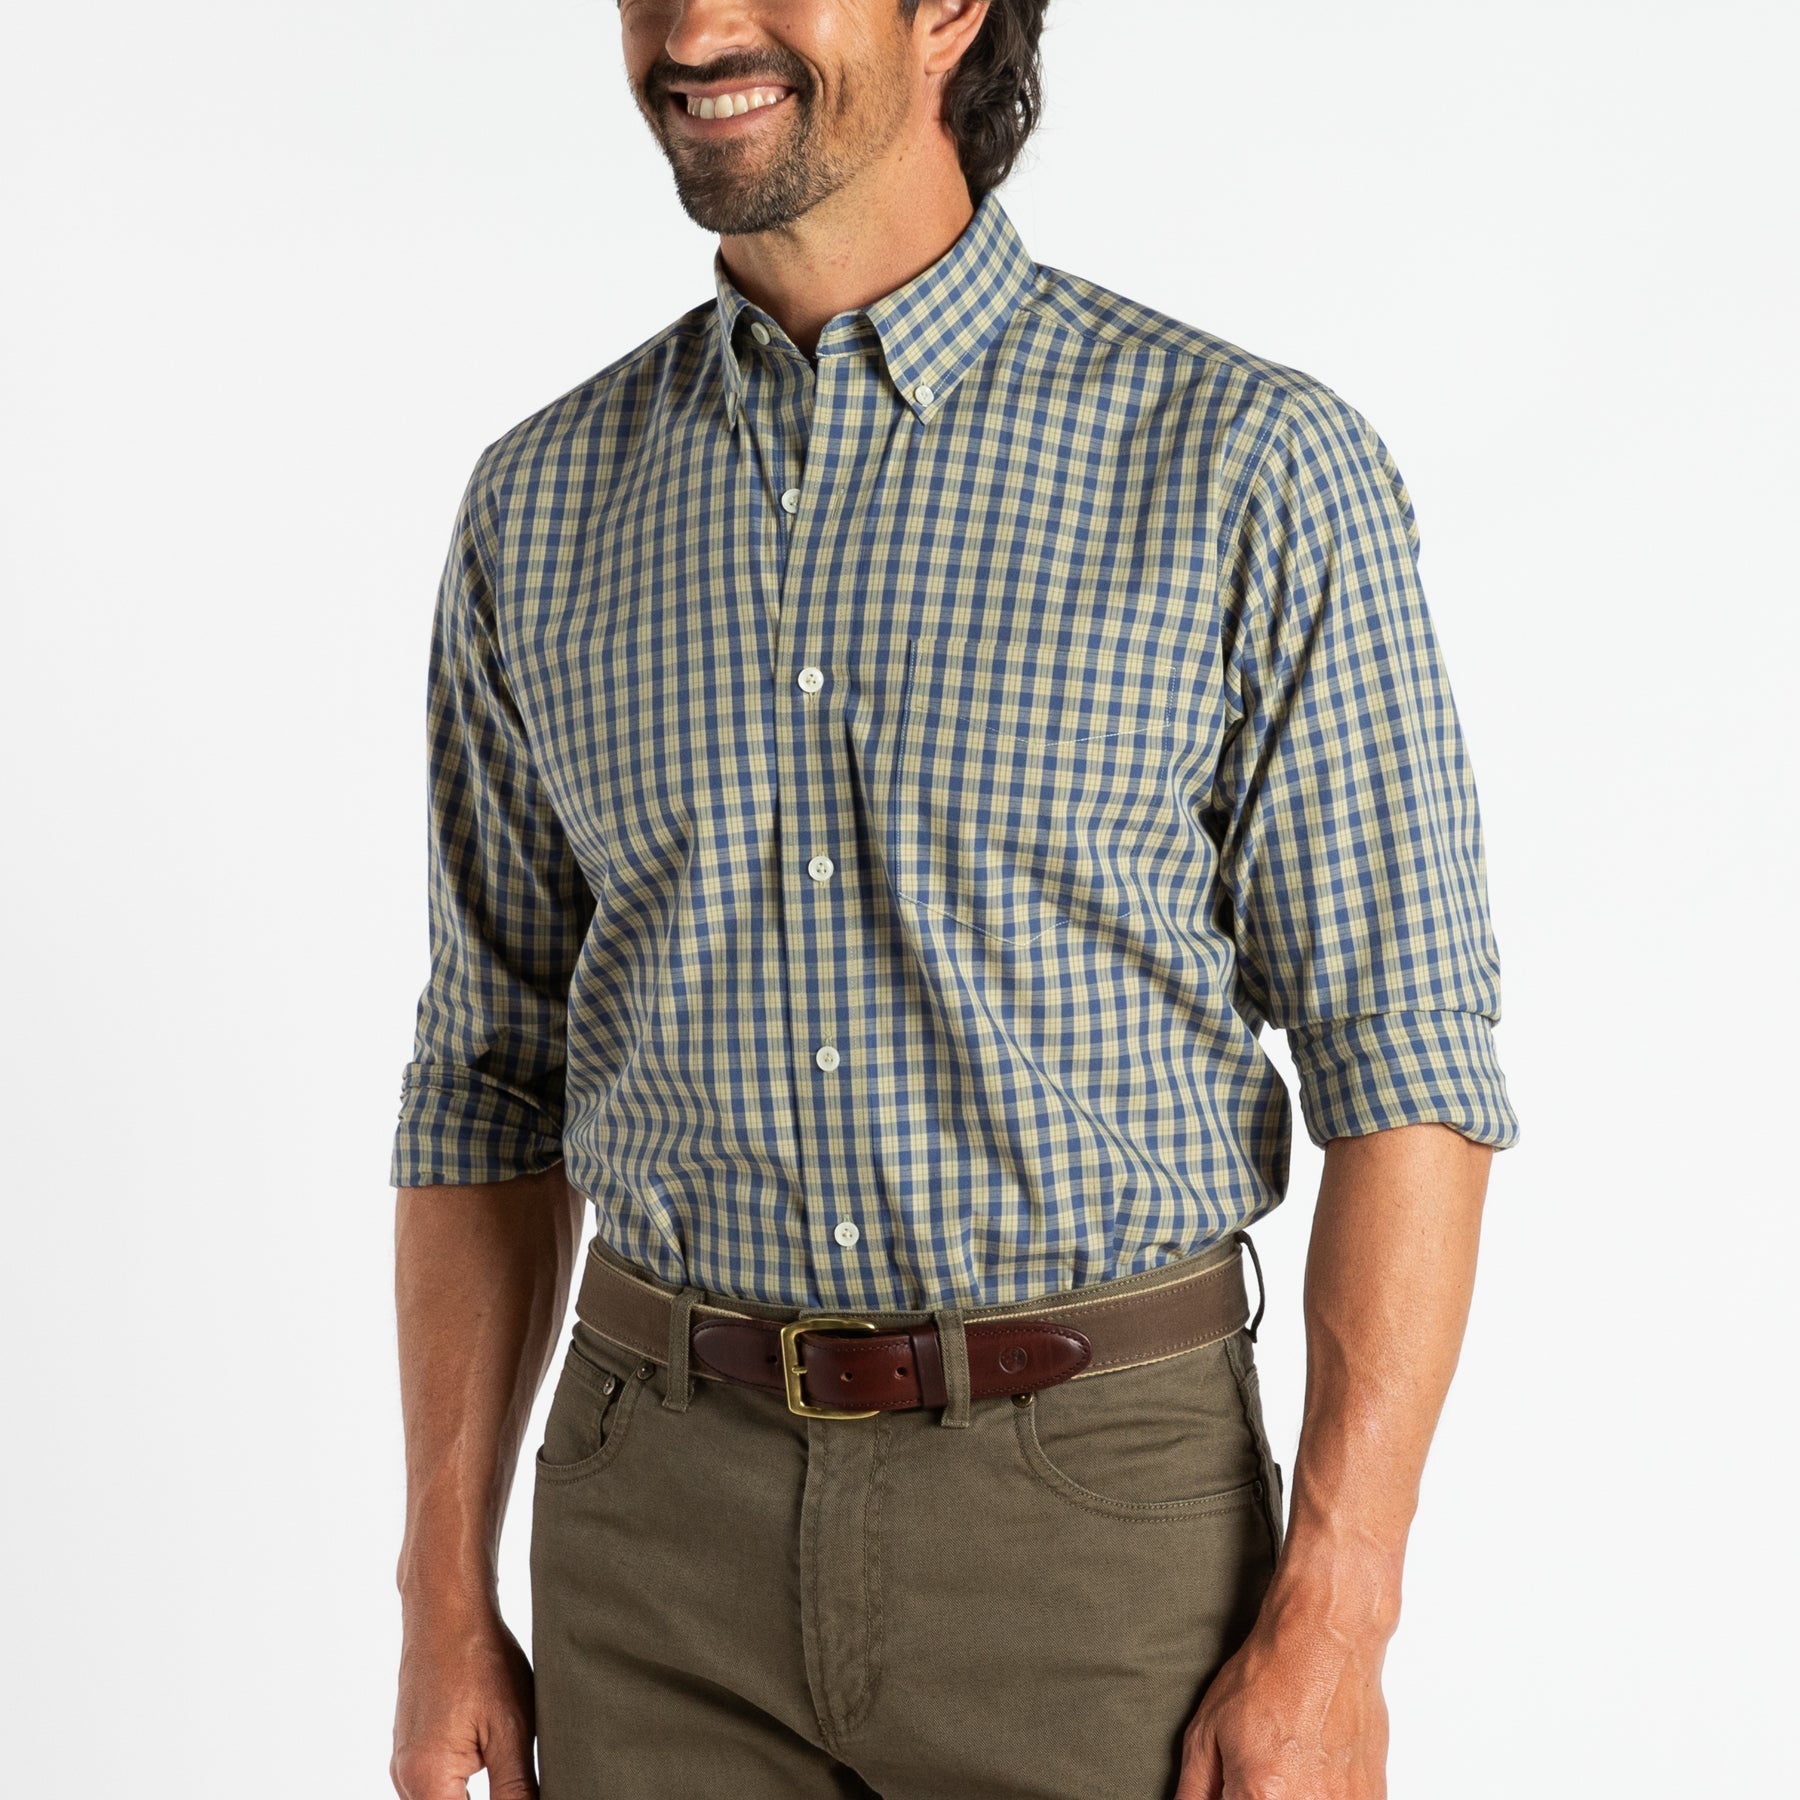 Tomlin Collar Plaid Poplin Shirt | Duck Head - Apparel